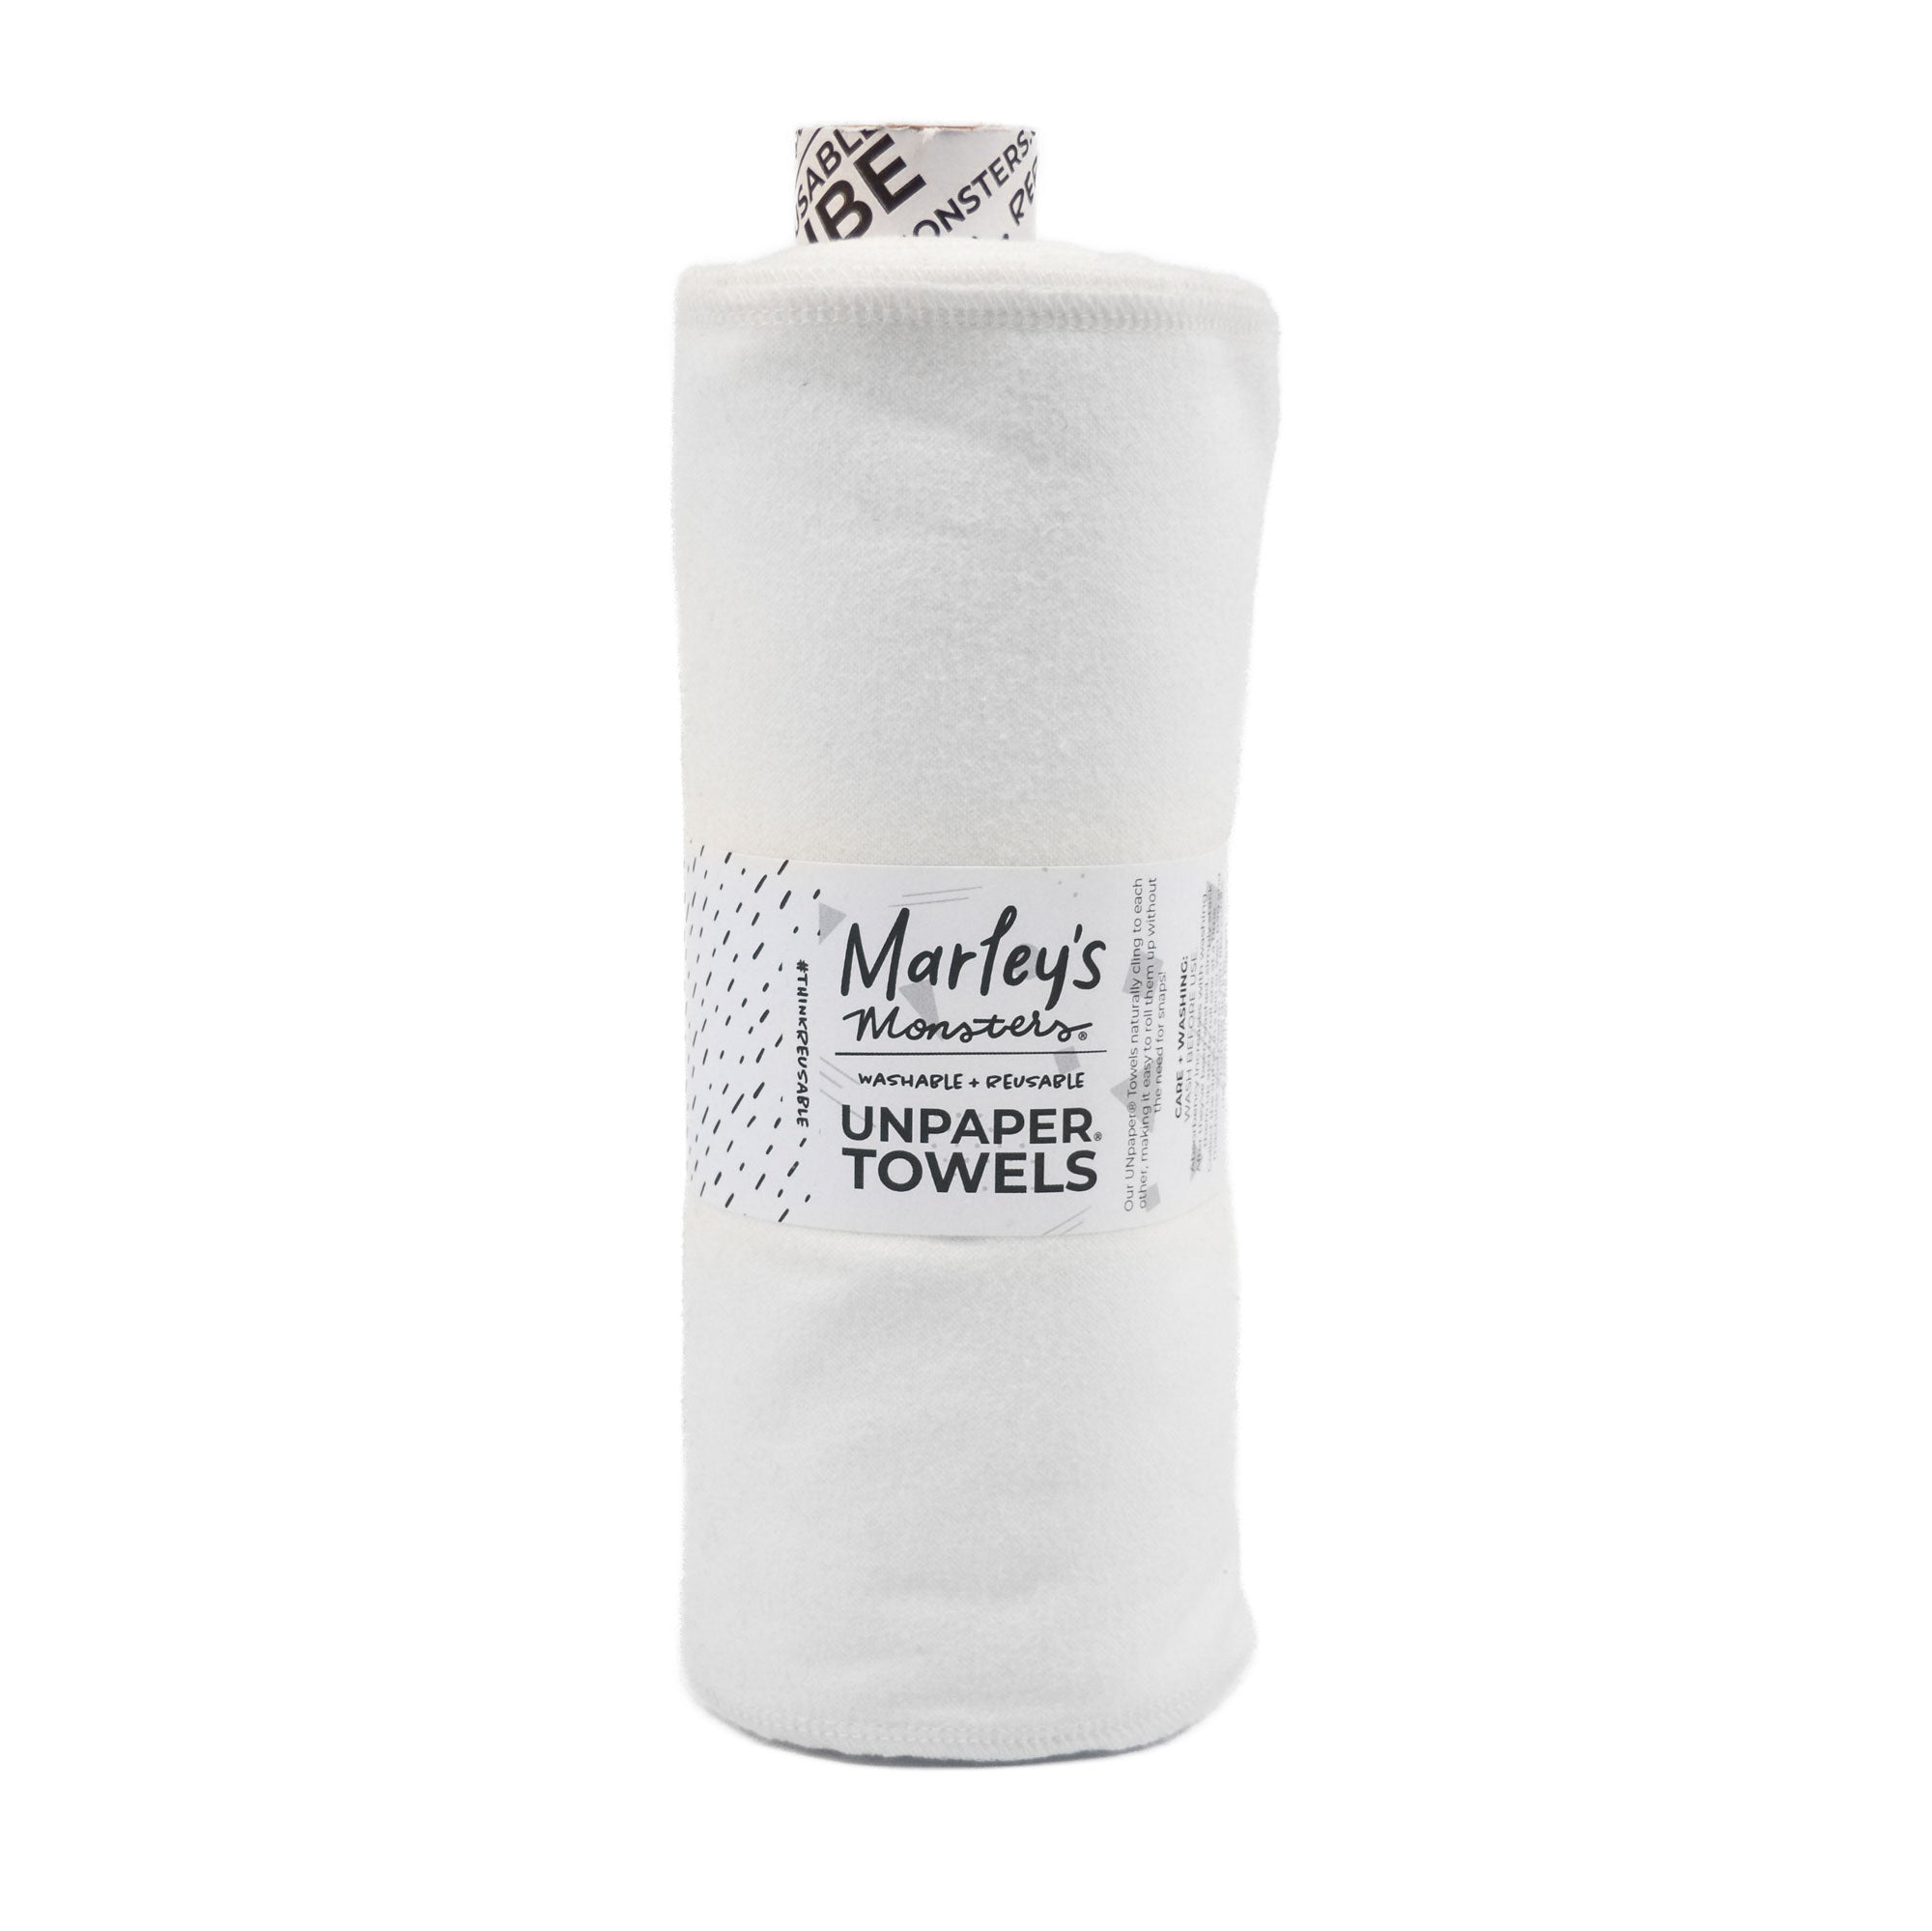 Clearance Roll of 6 Reusable Unpaper Towels // Mandala Coral